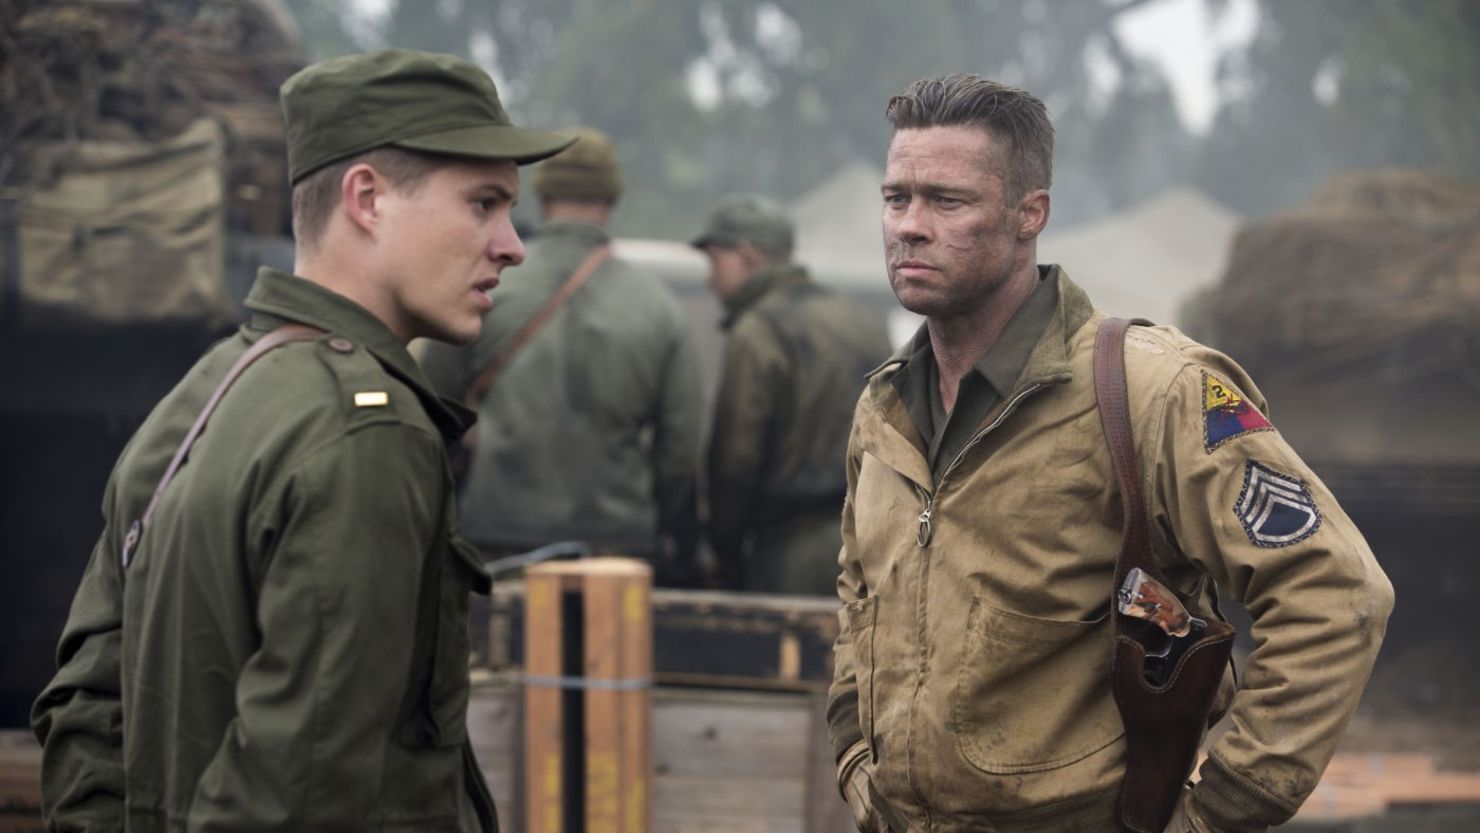 Brad Pitt stars in the World War II tank drama "Fury" as a U.S. Army tank commander named "Wardaddy."